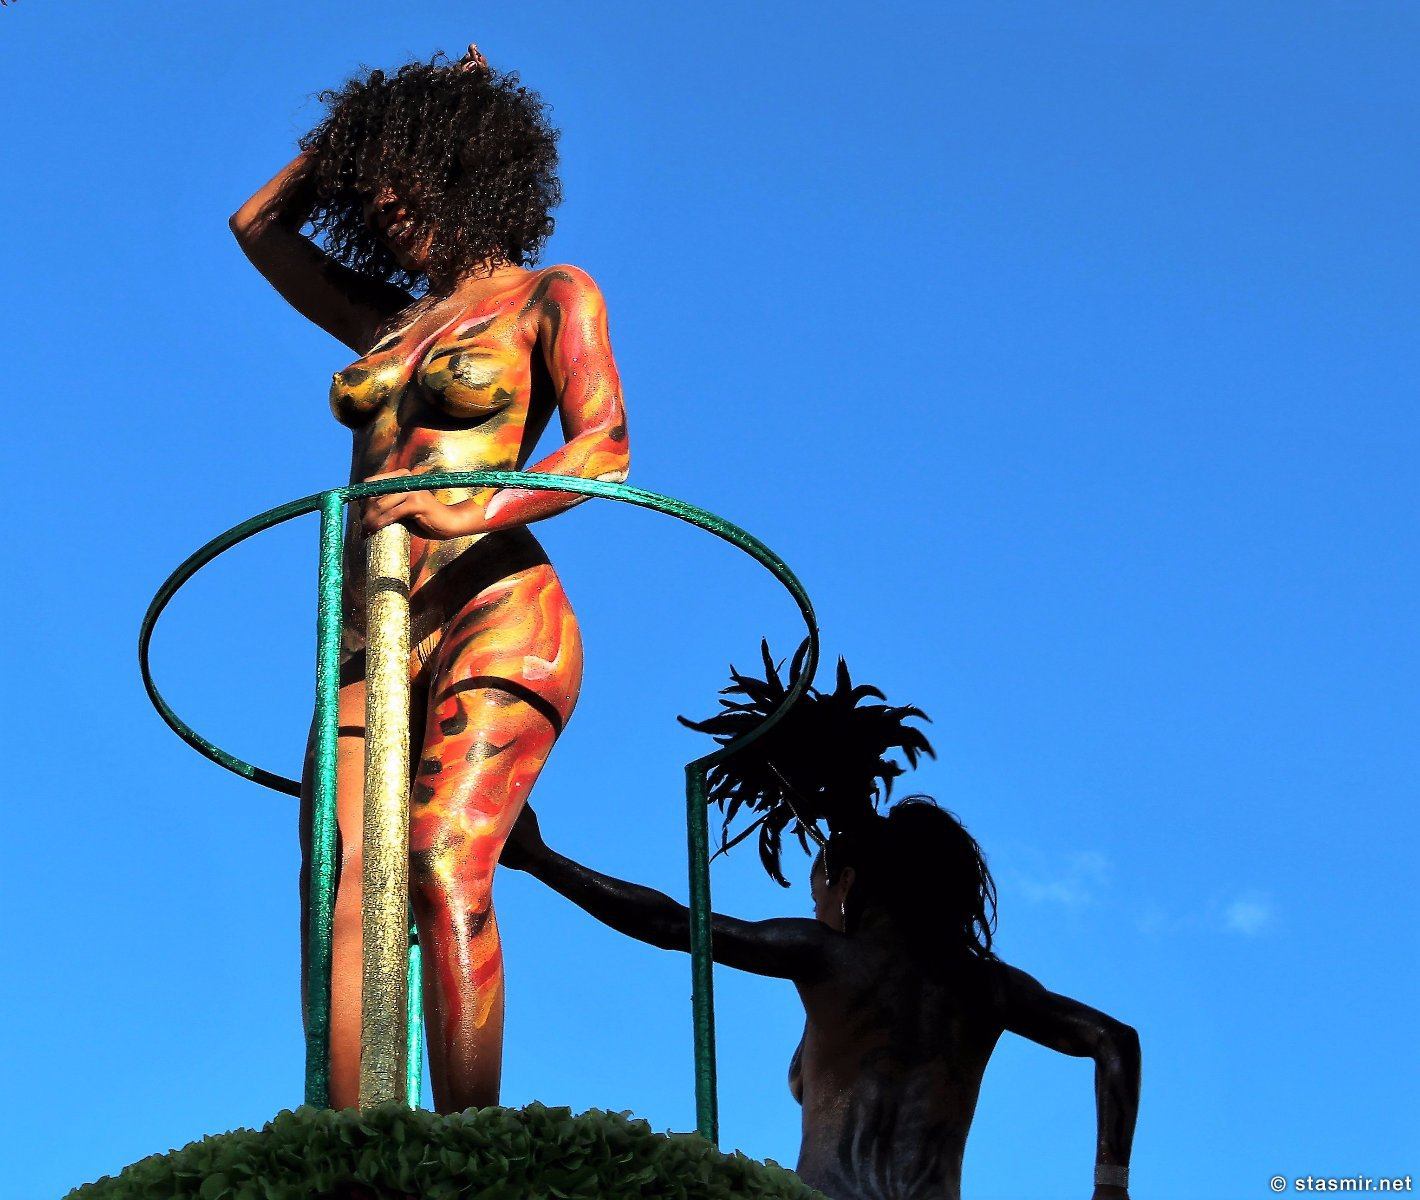 Тема сисек хорошо раскрыта на карнавале в Луле, Алгарве, Португалия, фото Стасмир, photo Stasmir